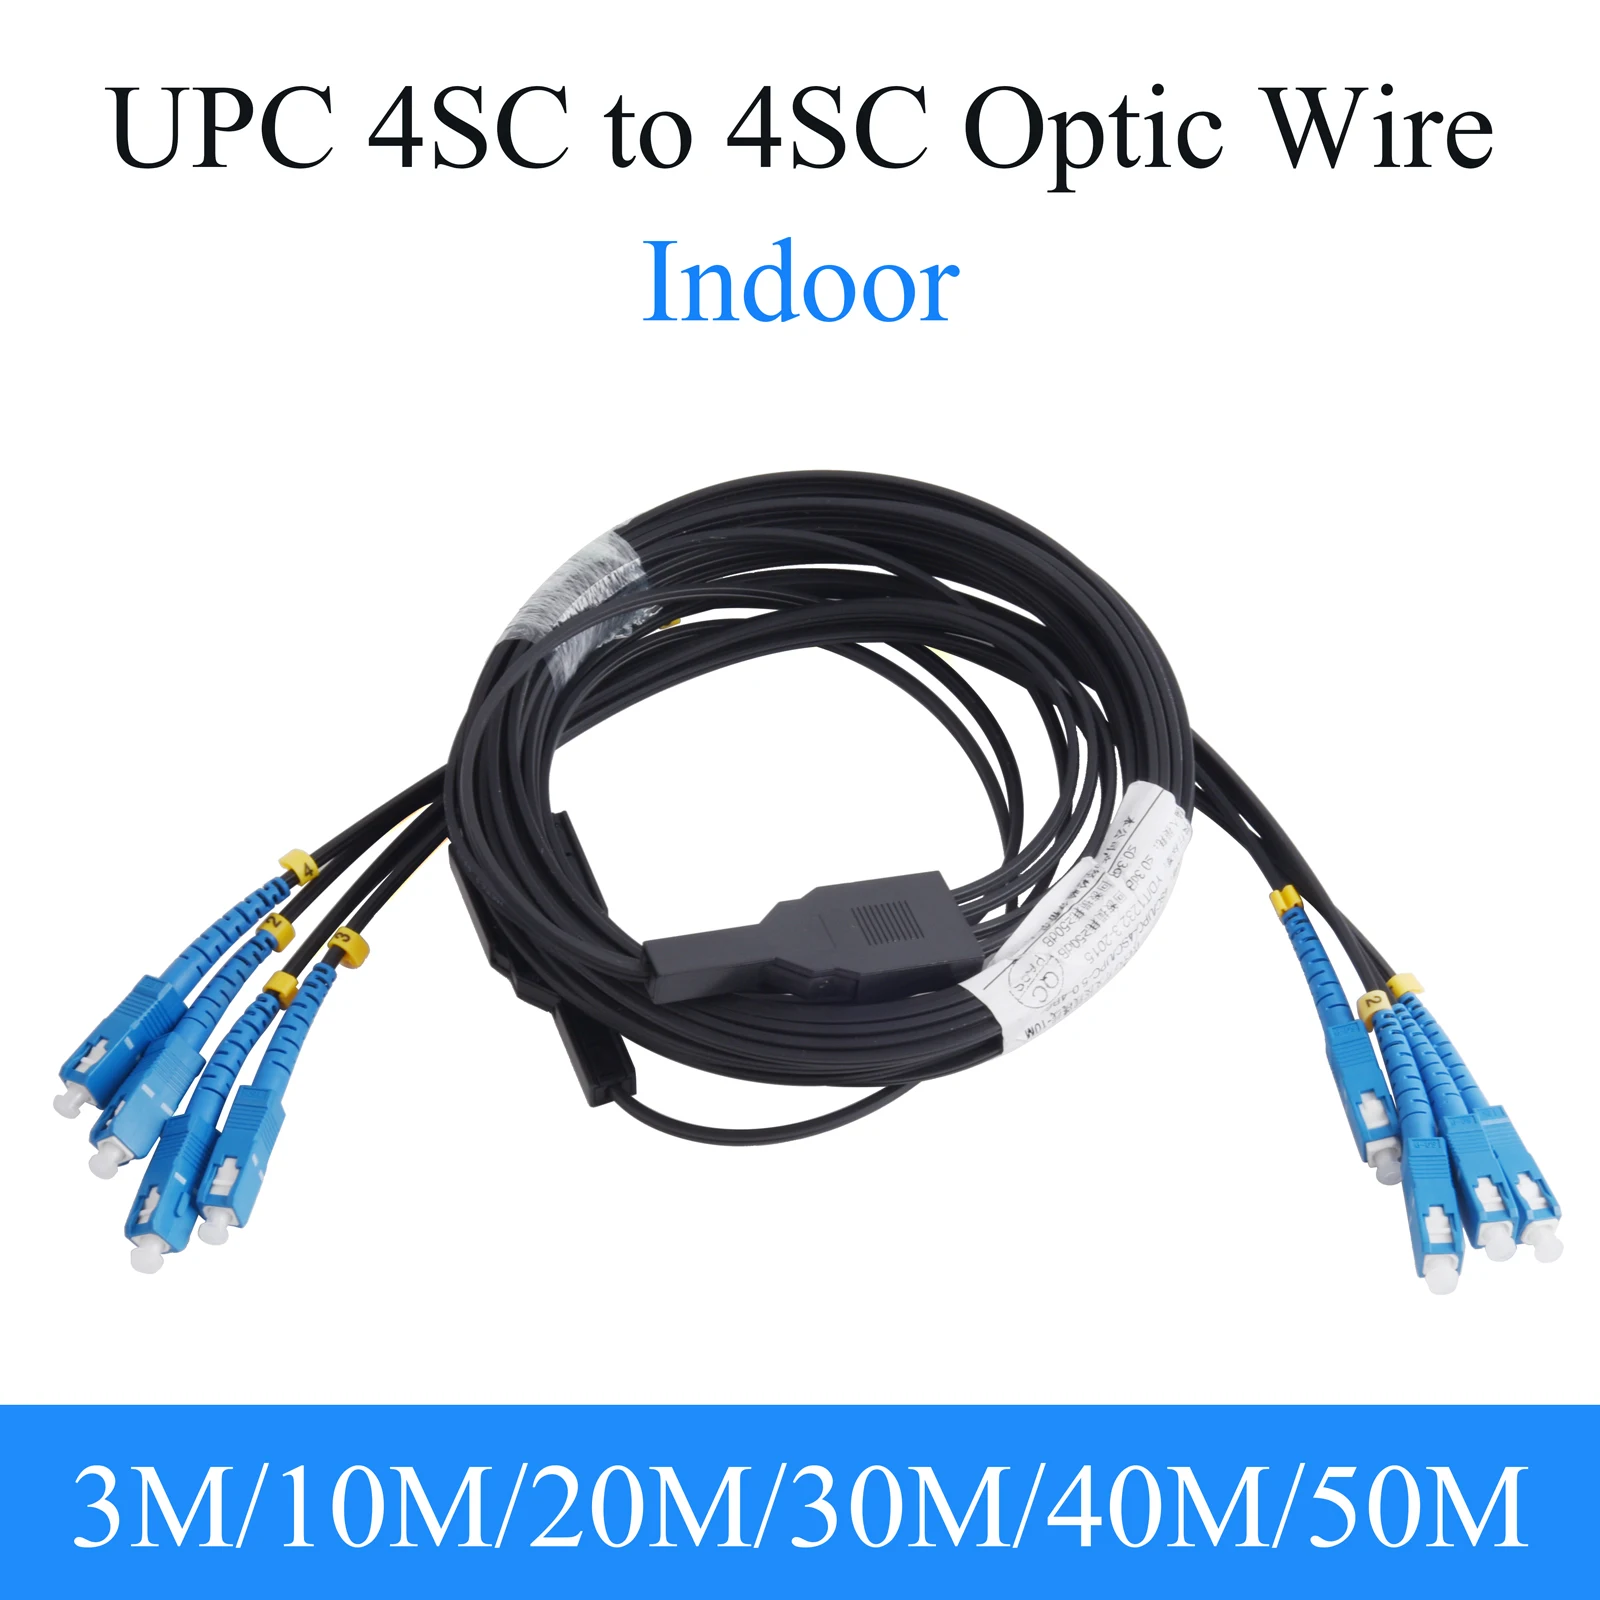 Fiber Optic Wire UPC 4 SC to 4 SC Optical Single-mode 4-core Indoor Extension Cable Simplex Patch Cord 3M/10M/20M/30M/40M/50M